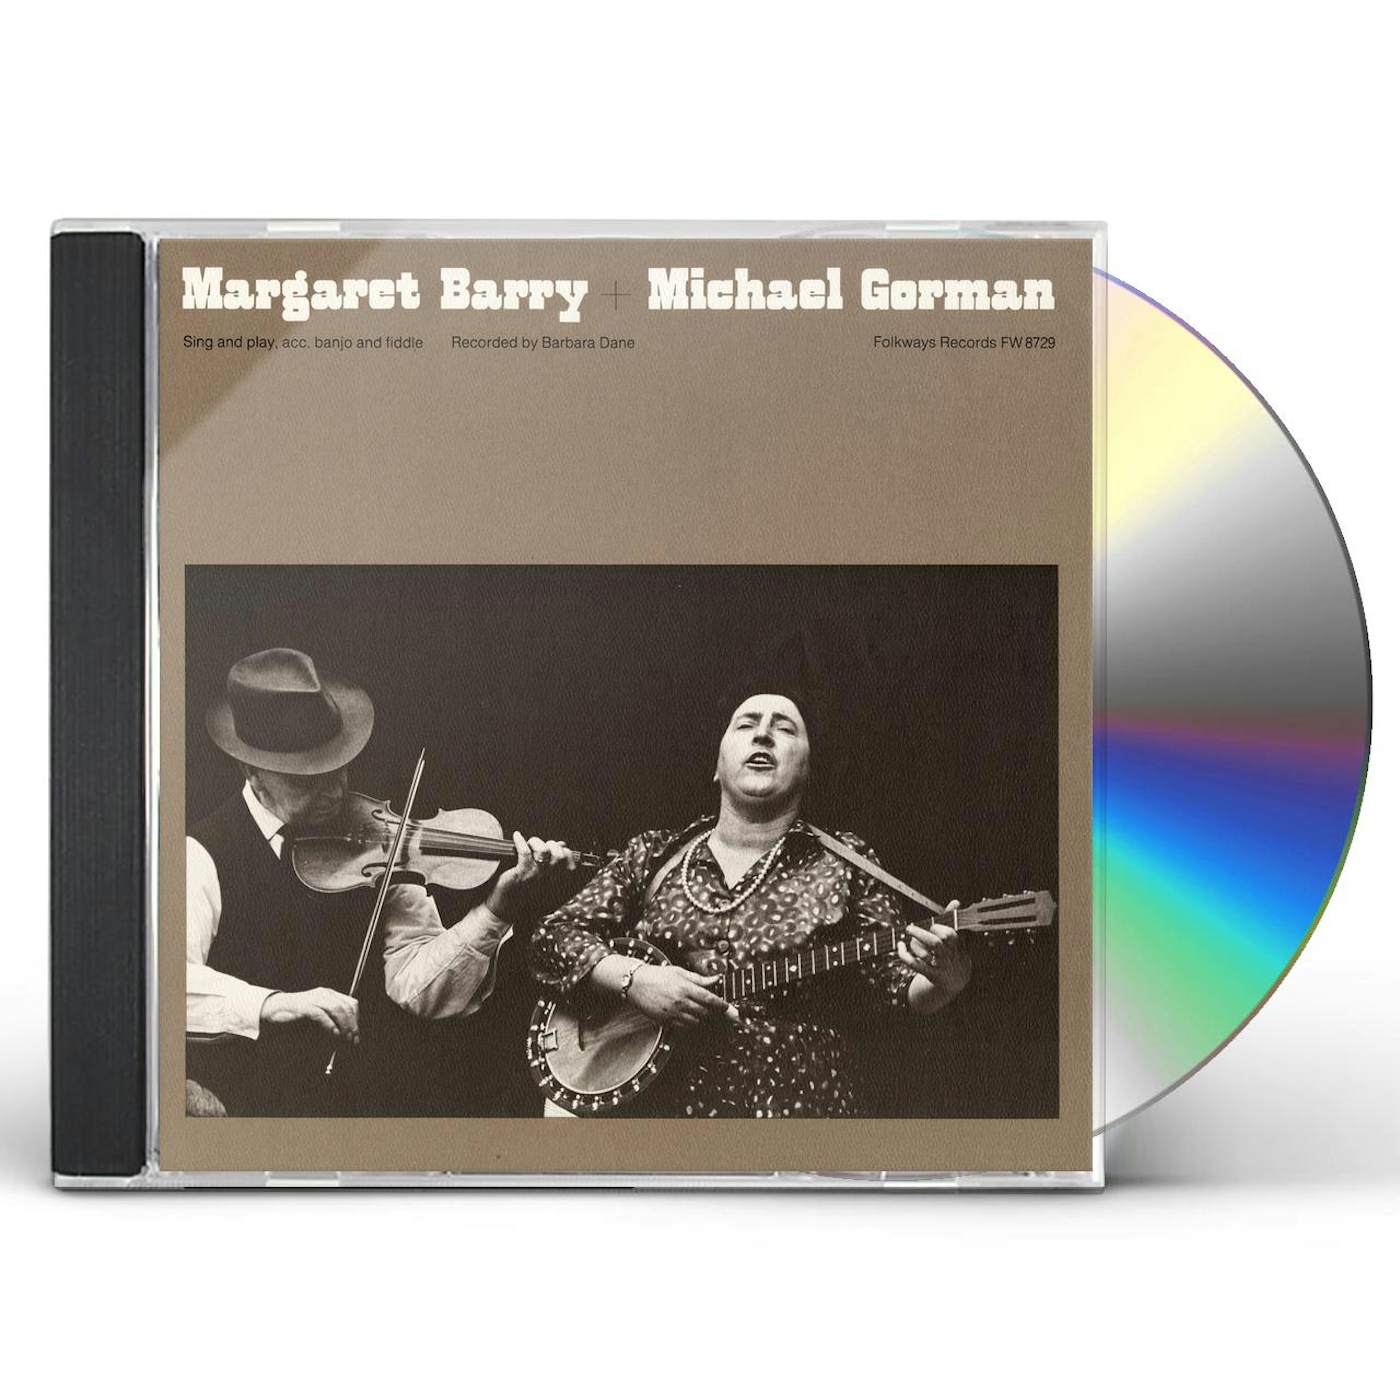 MARGARET BARRY AND MICHAEL GORMAN CD